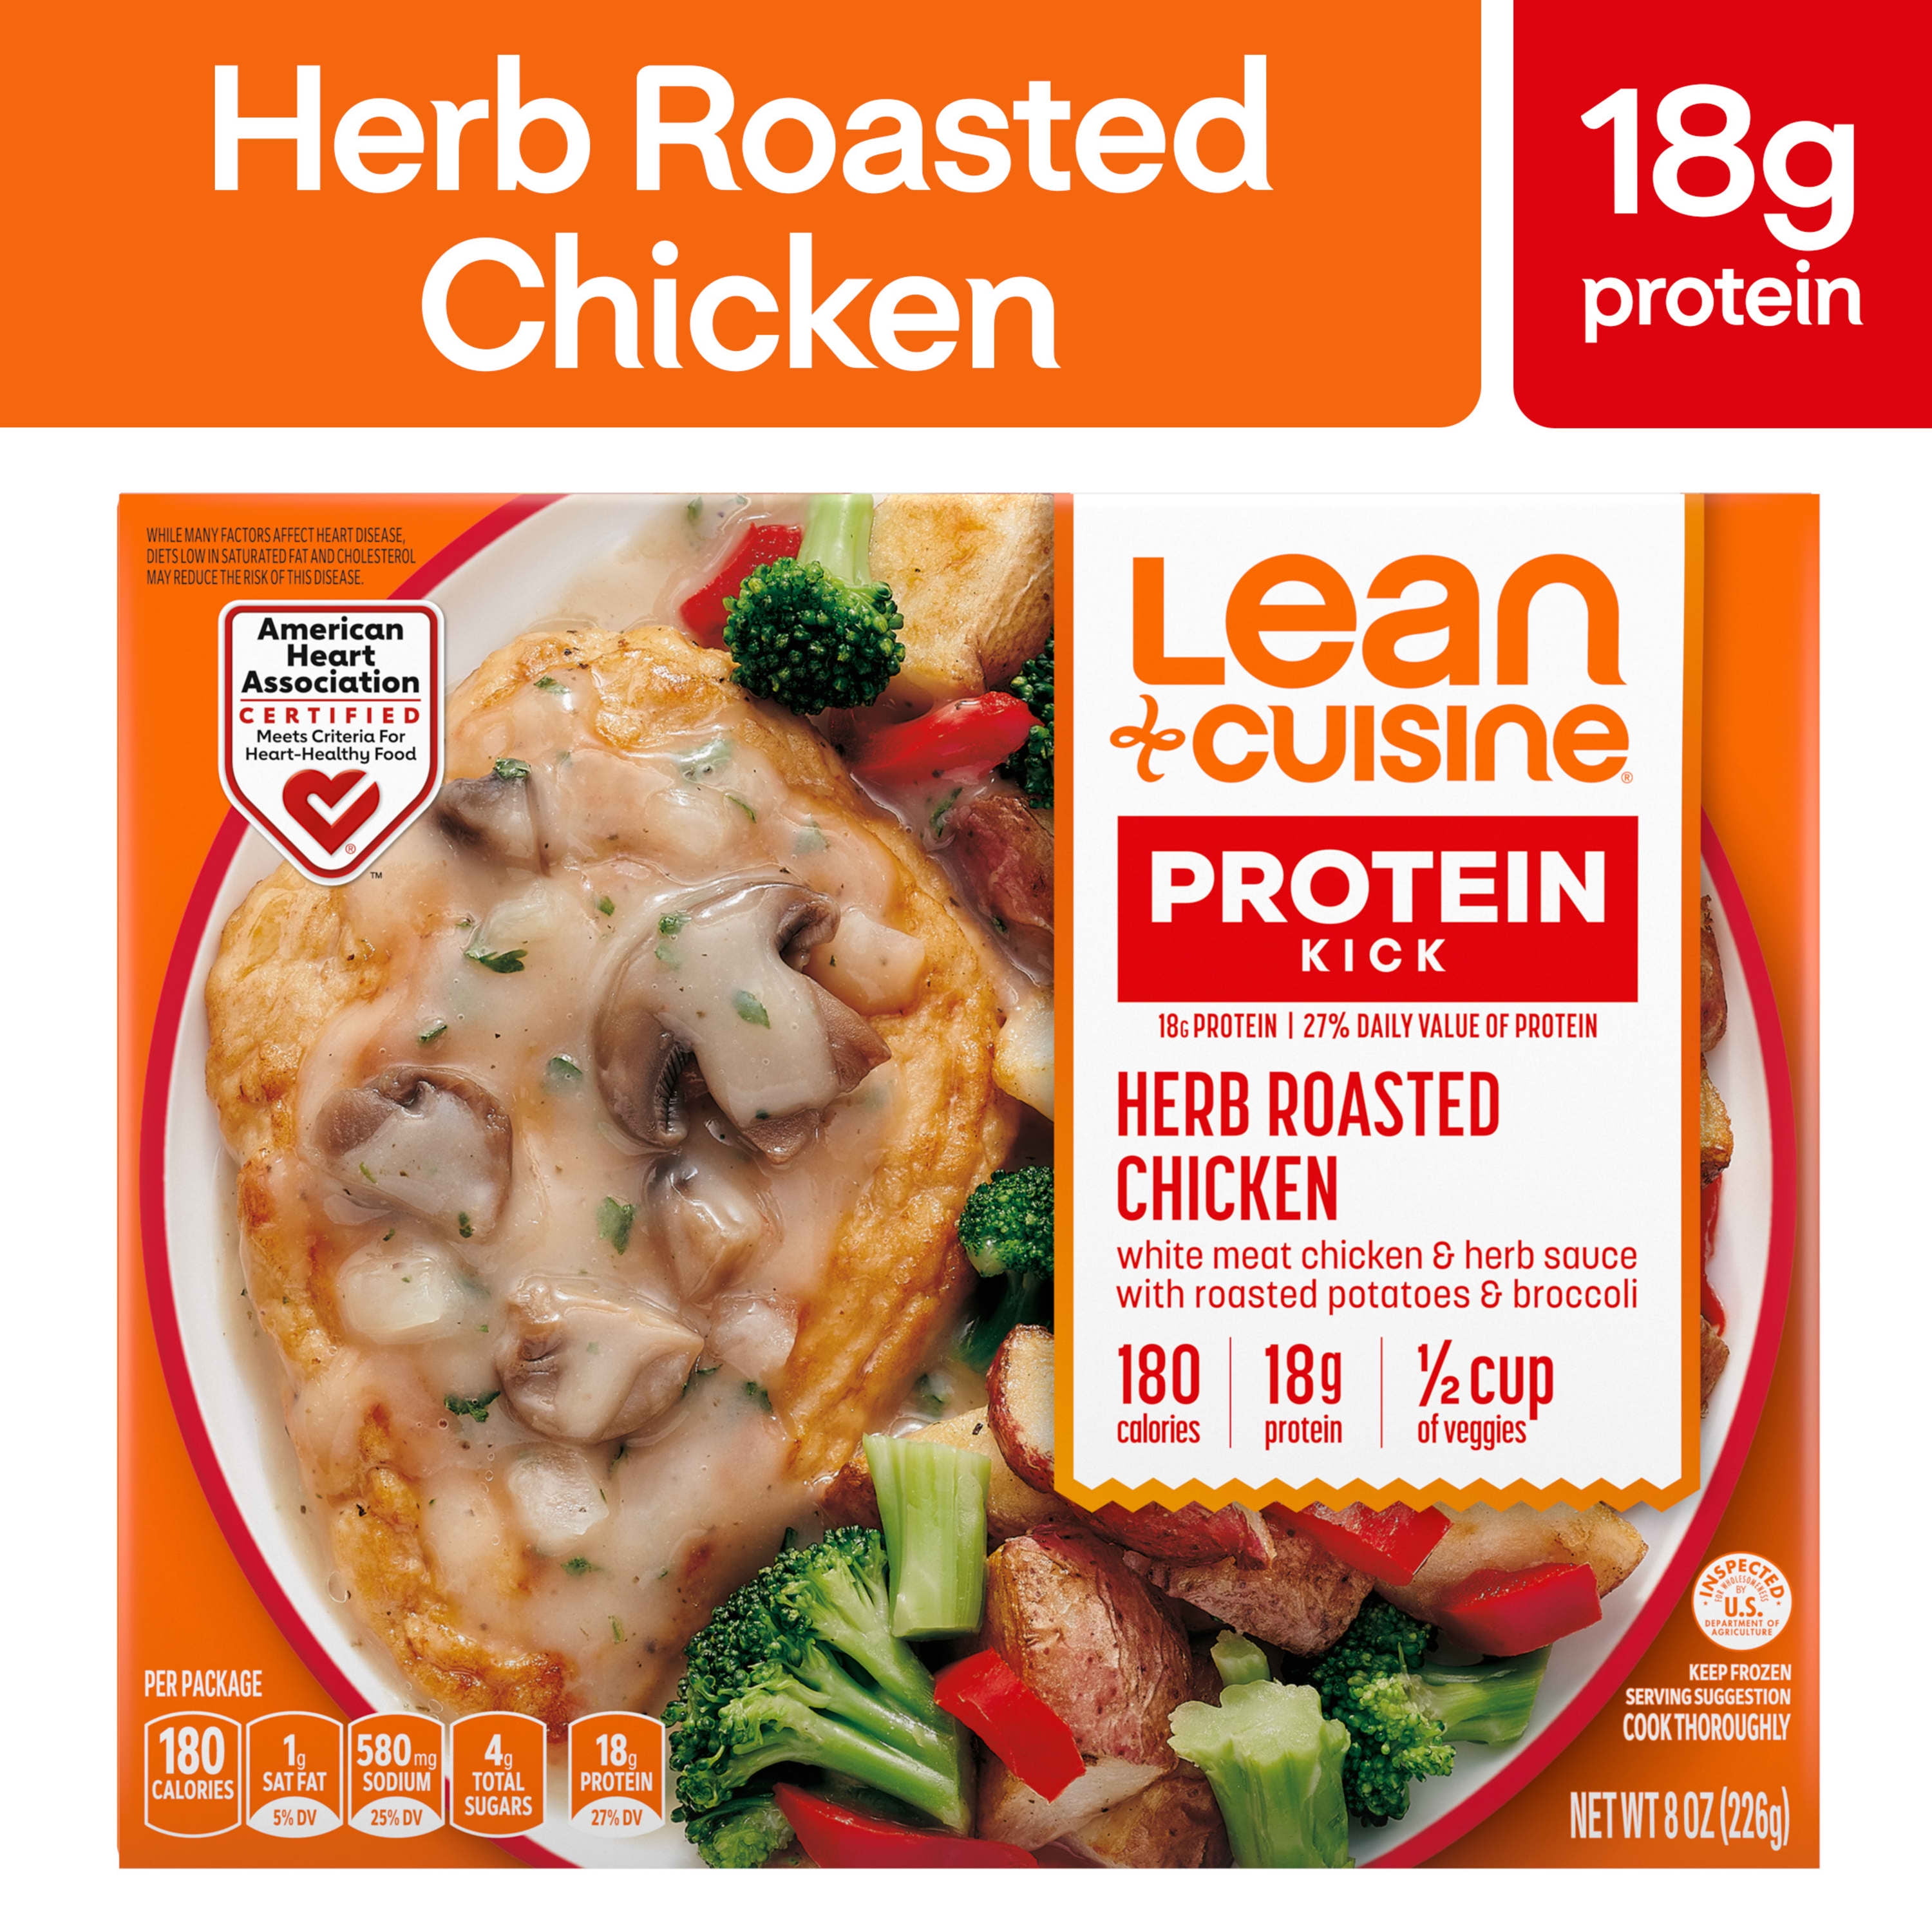 Lean Cuisine Herb Roasted Chicken Meal, 8 oz (Frozen)